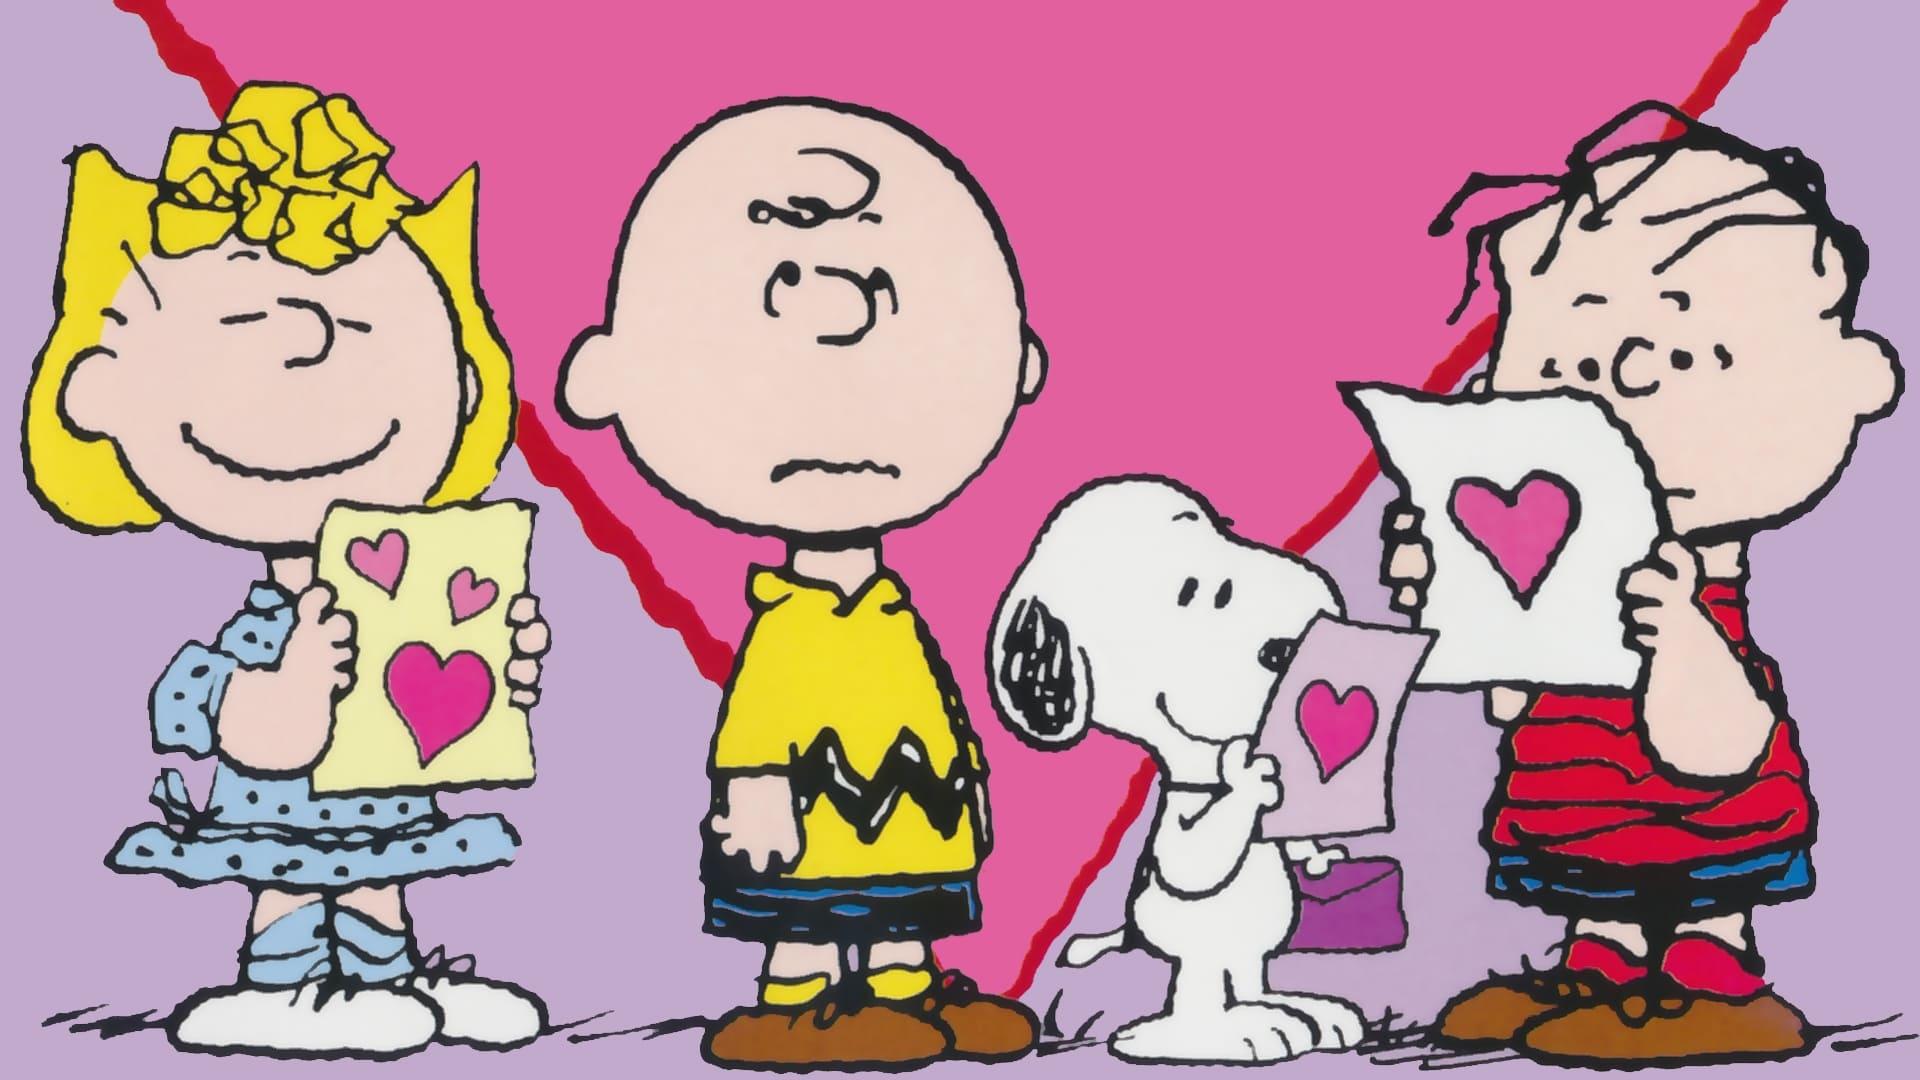 A Charlie Brown Valentine backdrop